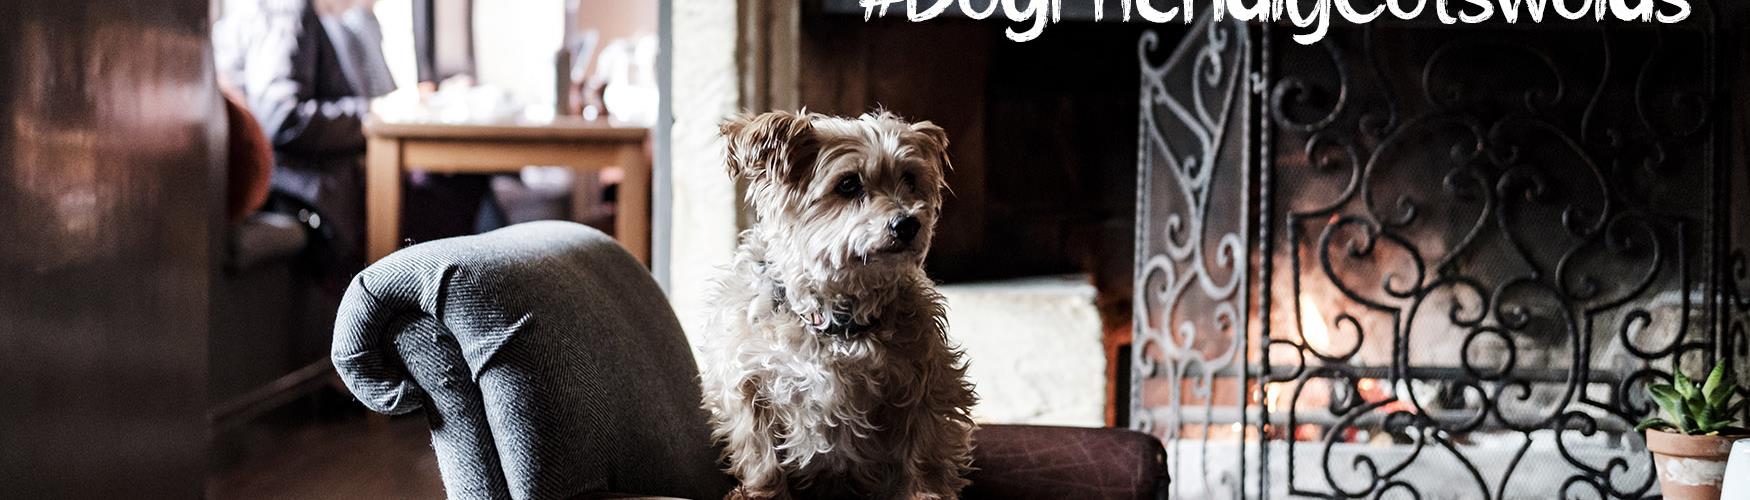 #DogFriendlyCotswolds - photo courtesy of the Bay Tree Hotel